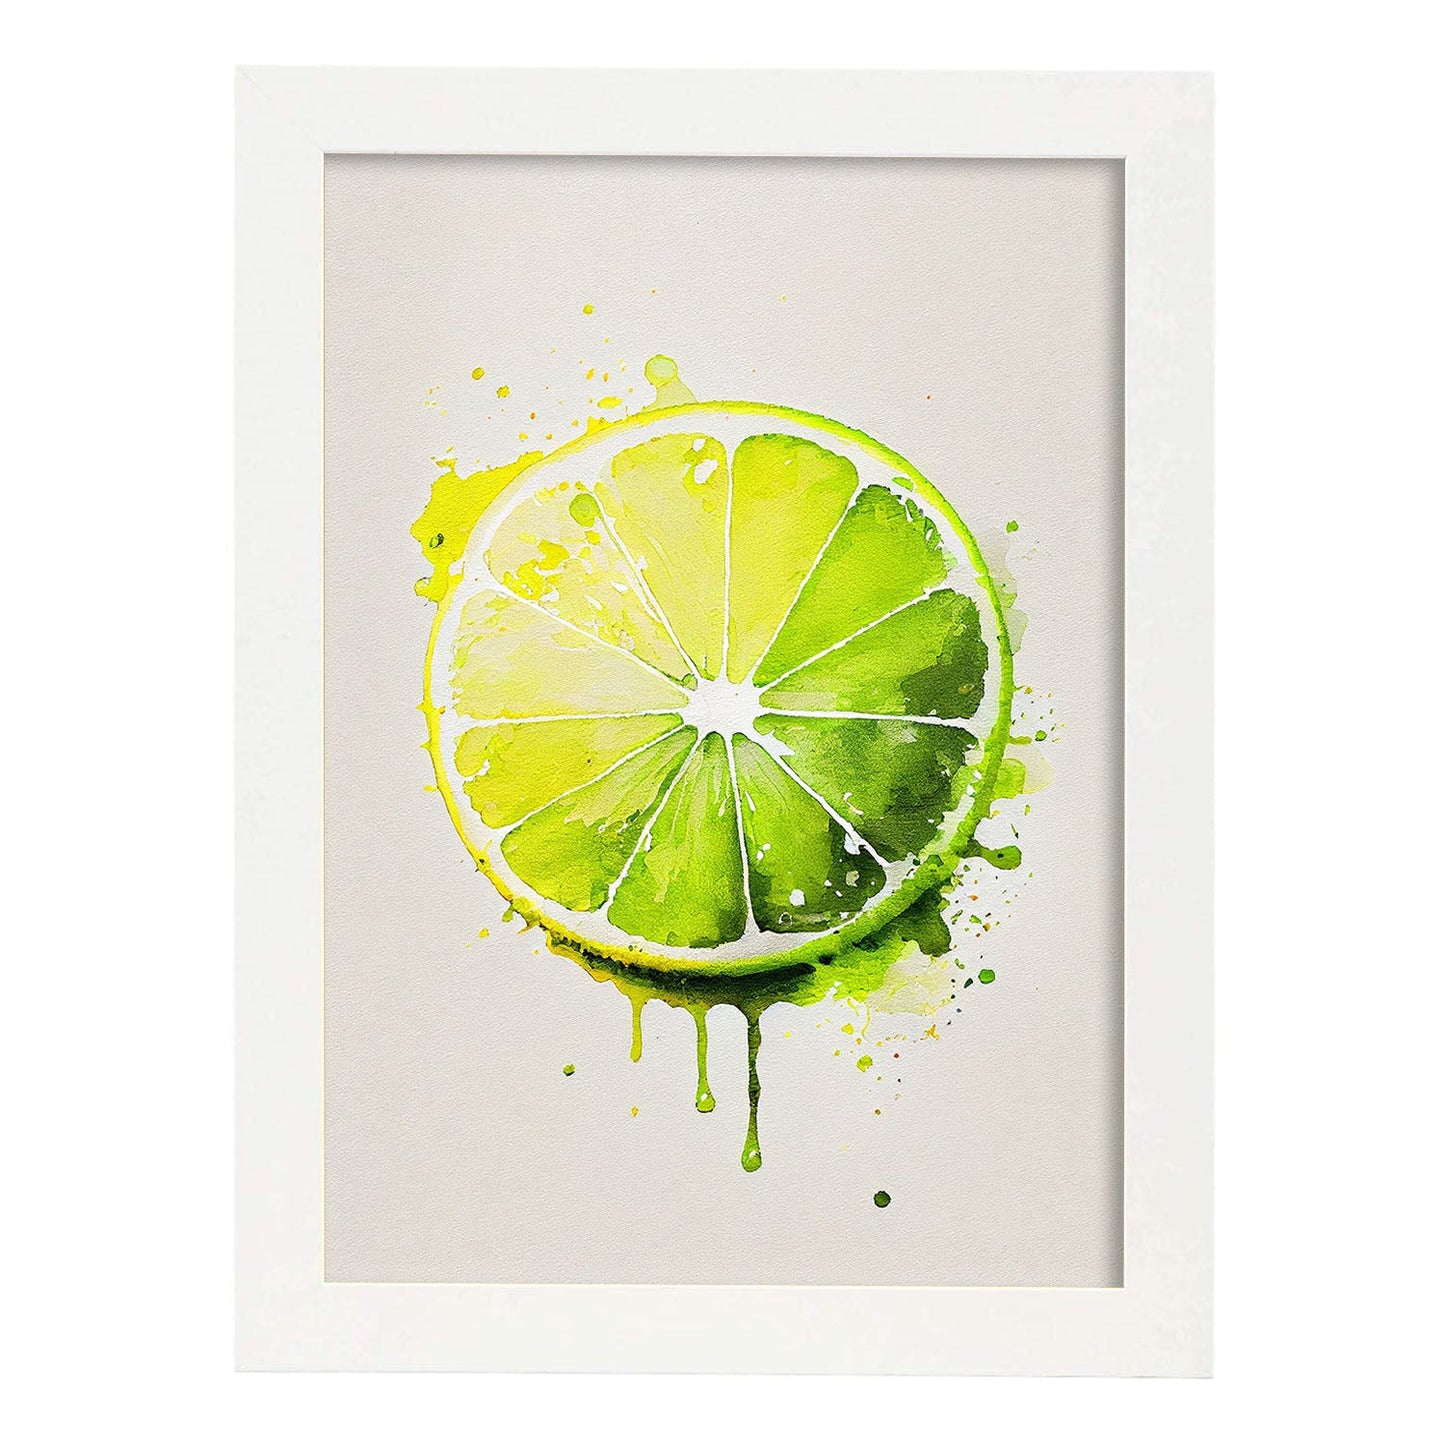 Nacnic minimalist Lime. Aesthetic Wall Art Prints for Bedroom or Living Room Design.-Artwork-Nacnic-A4-Marco Blanco-Nacnic Estudio SL